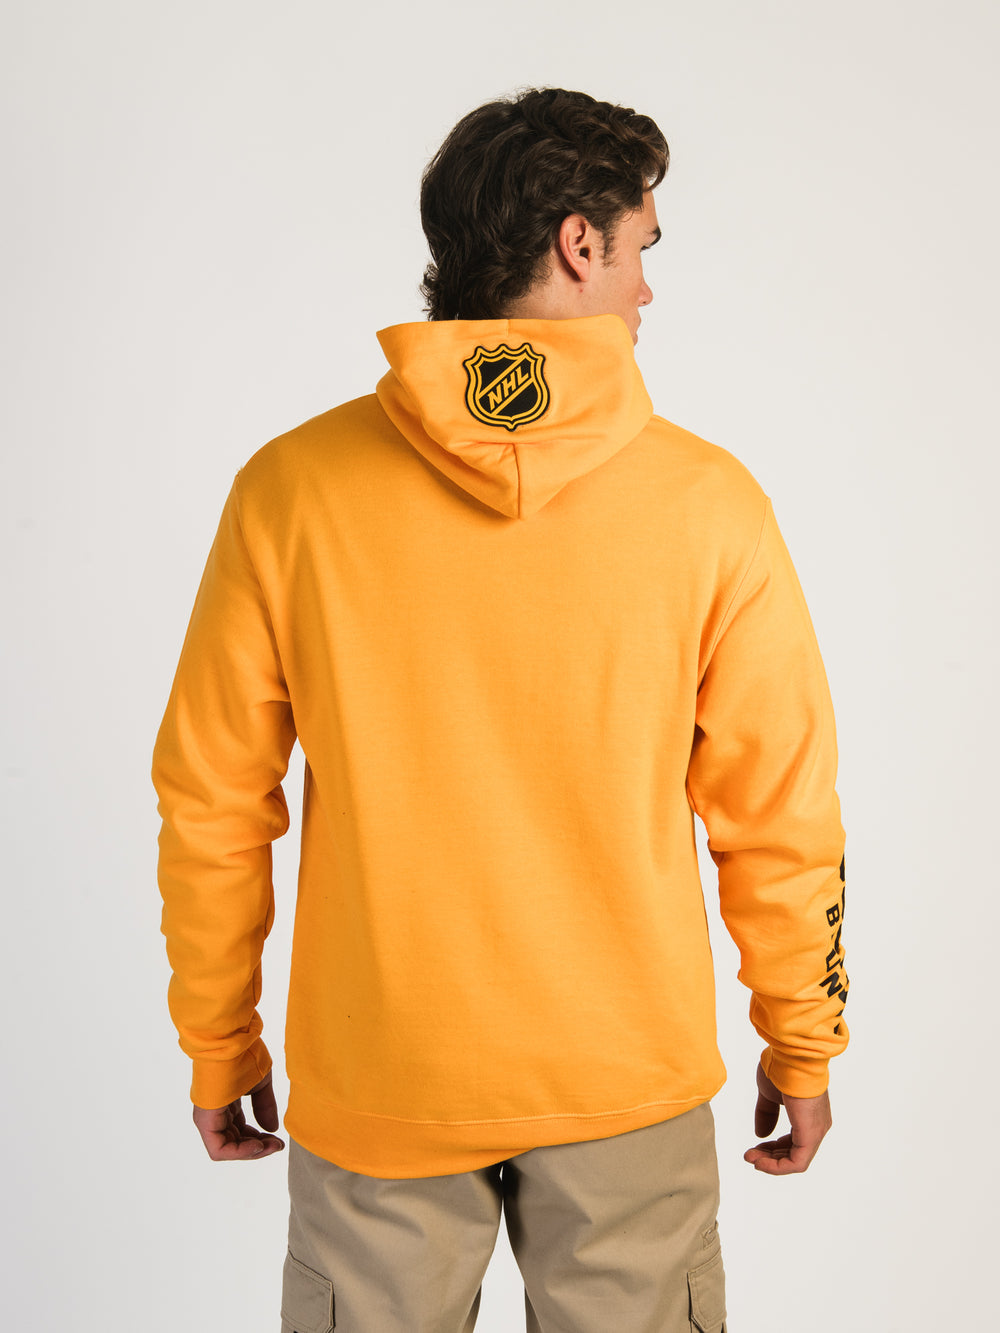 NHL Men's Hoodie - Yellow - L